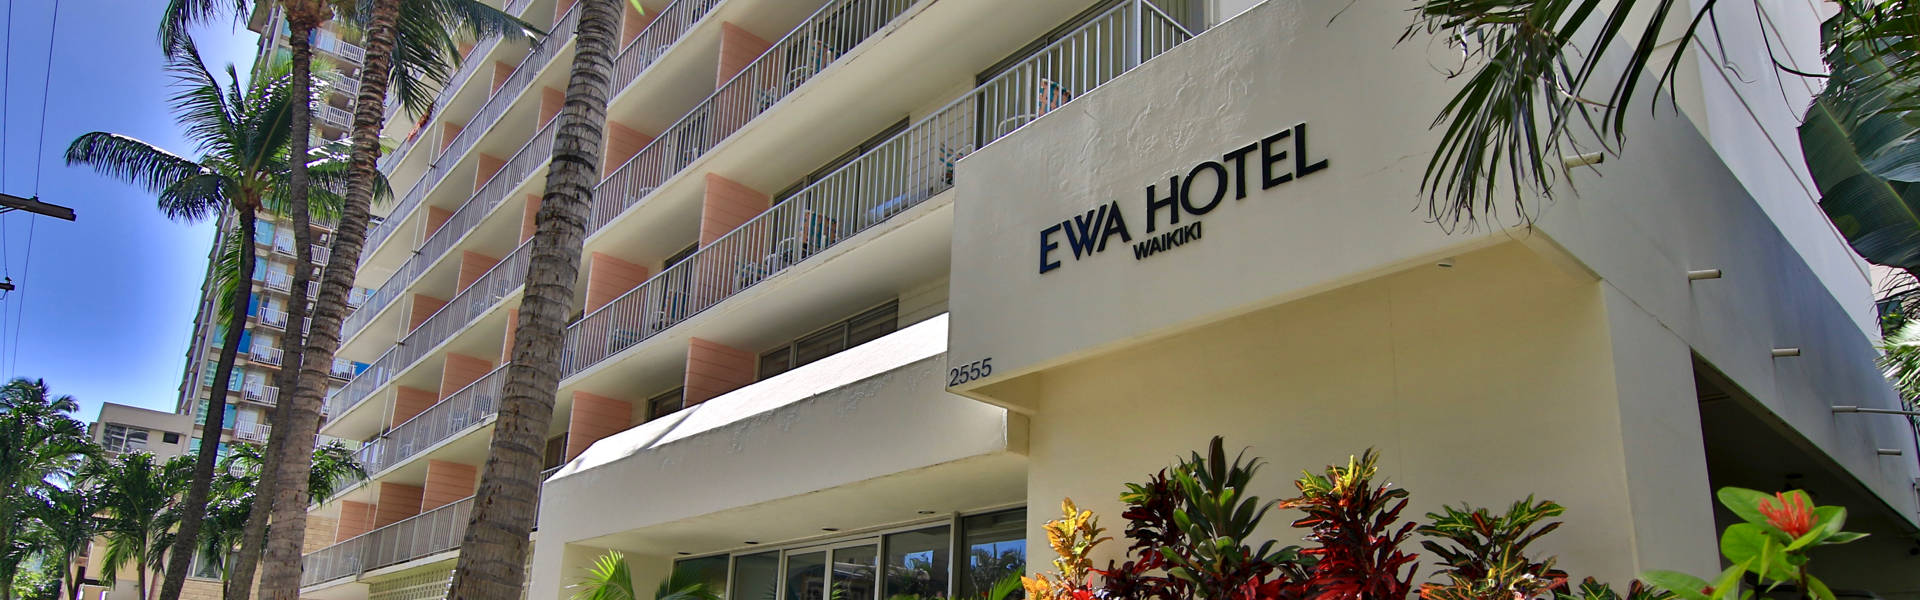 Lobby at Ewa Hotel Waikiki